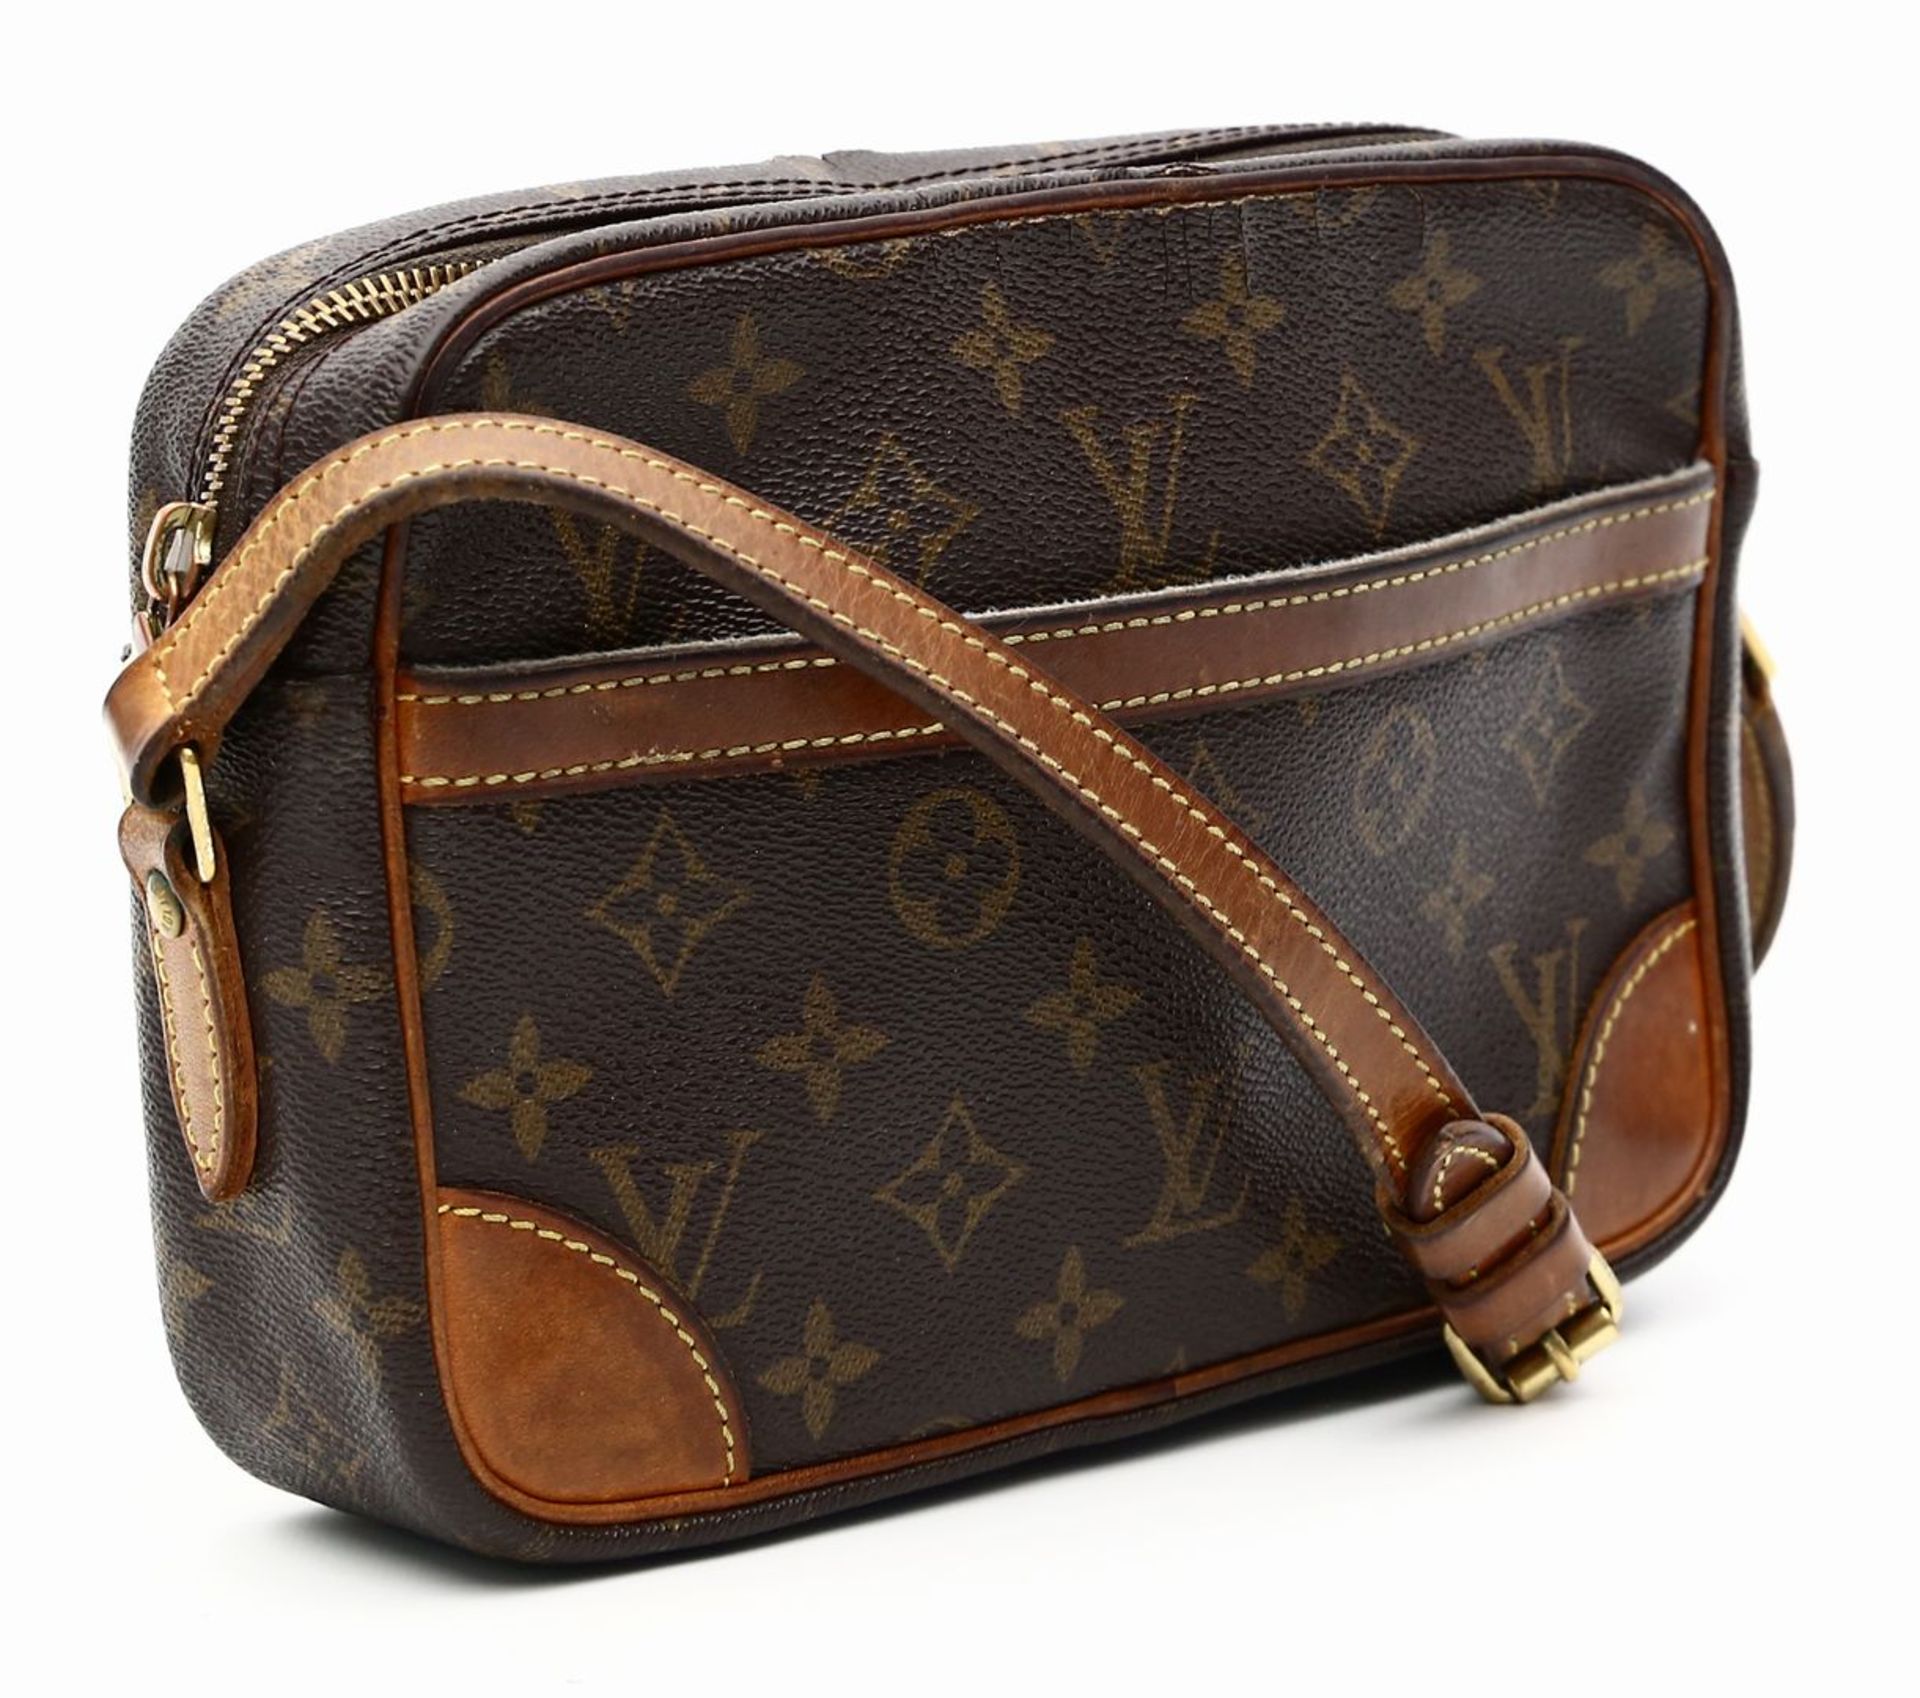 Crossbody bag "Trocadero 24", Louis Vuitton. - Bild 2 aus 2